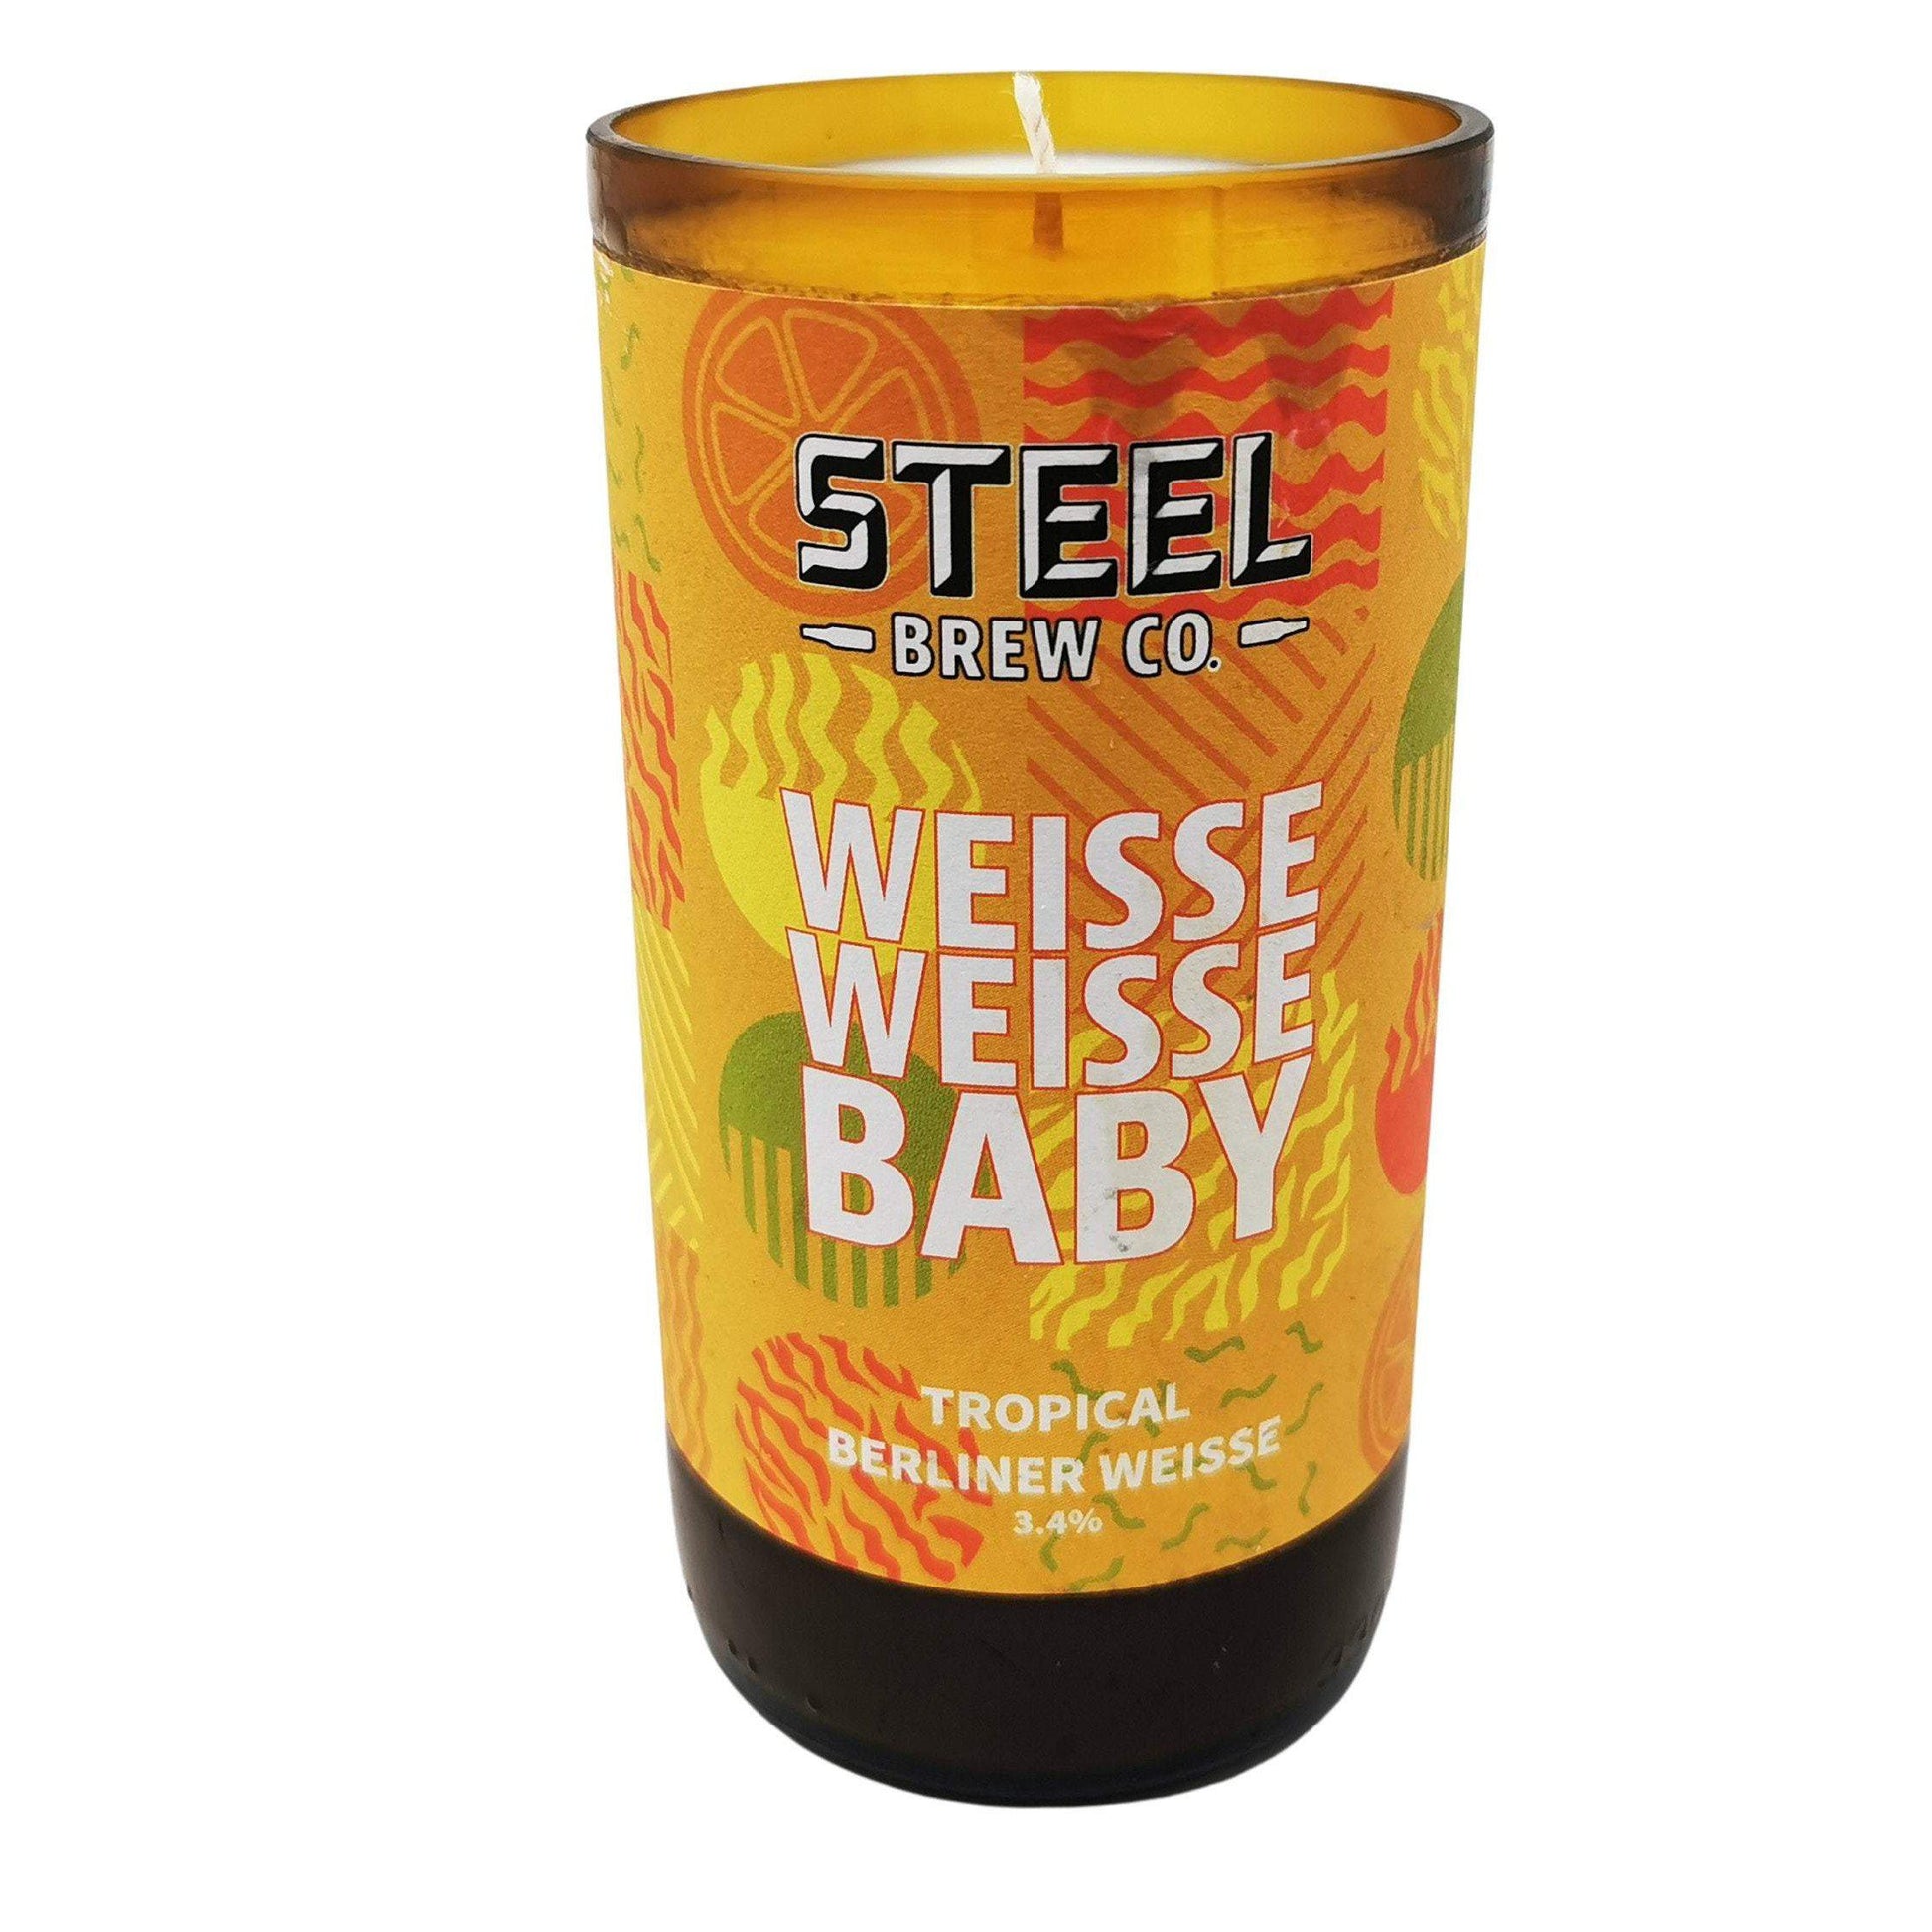 Steel Brew Weisse Weisse Baby Craft Beer Bottle Candle Beer & Ale Bottle Candles Adhock Homeware